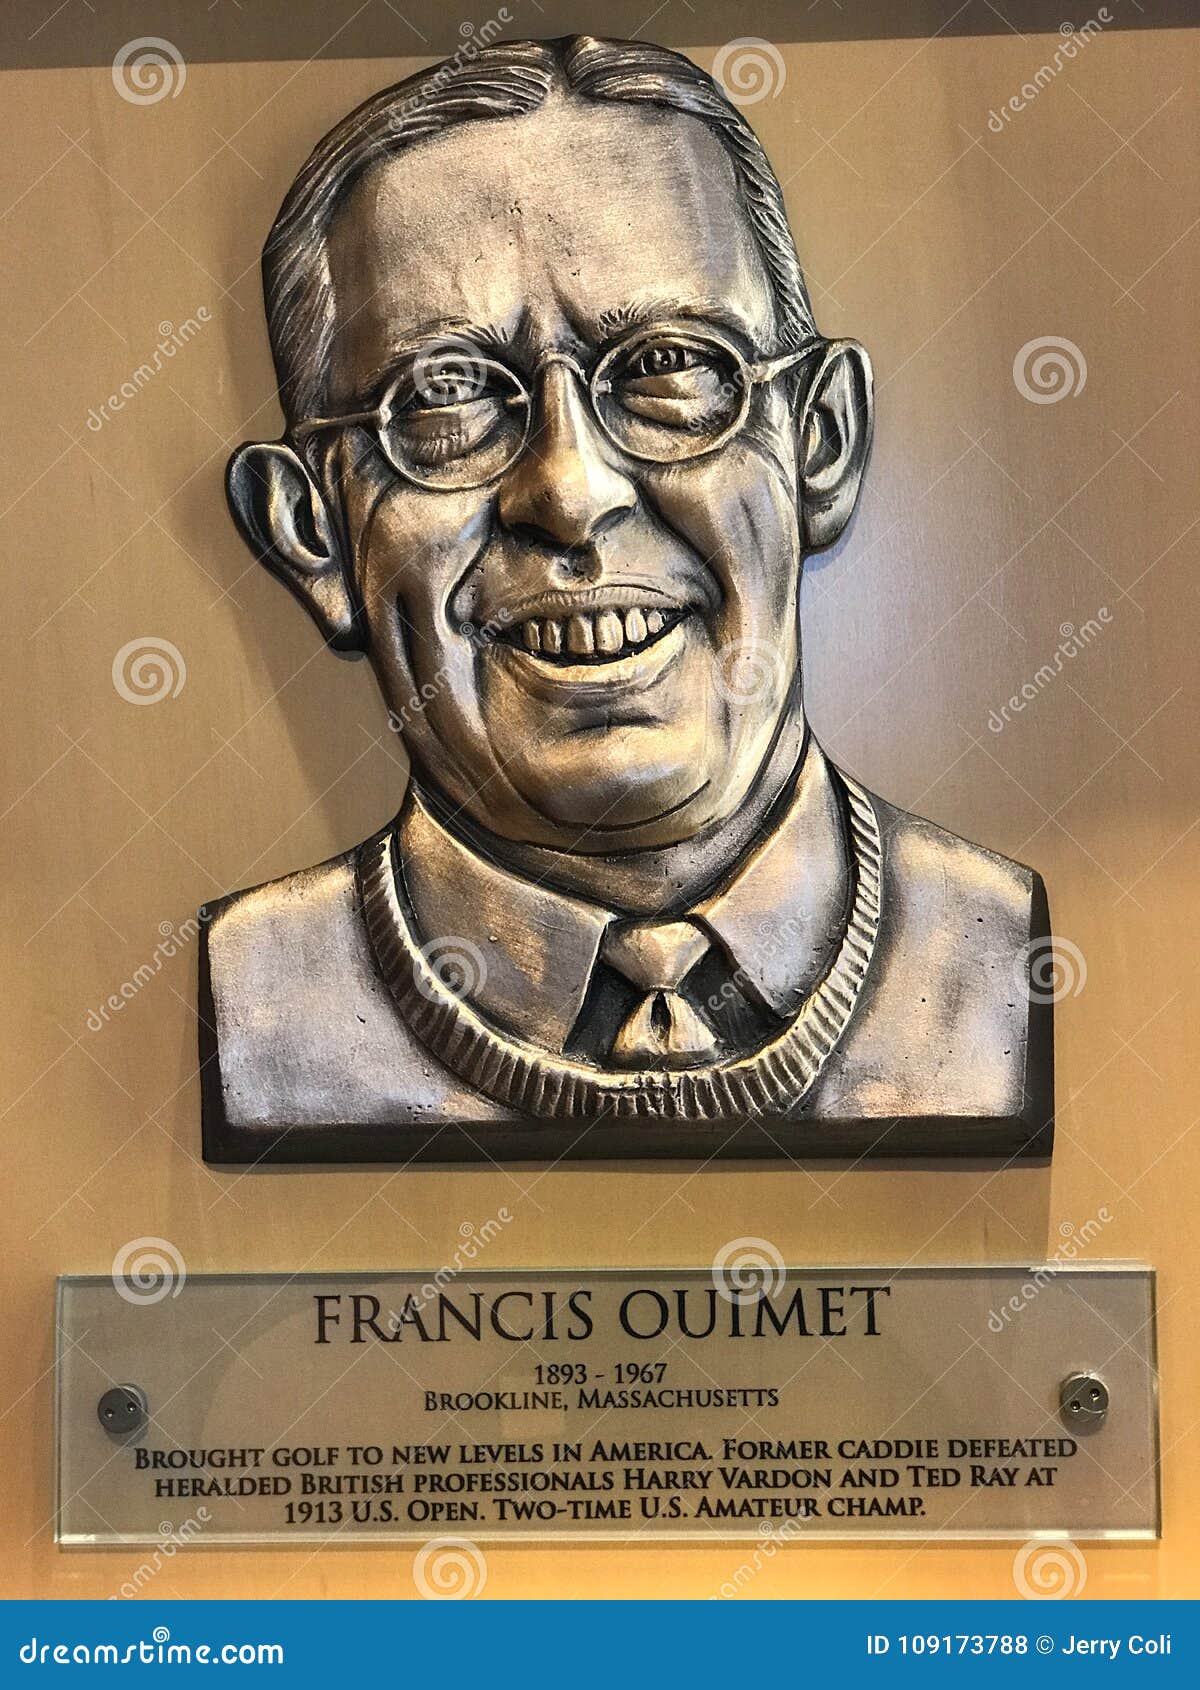 Francis ouimet